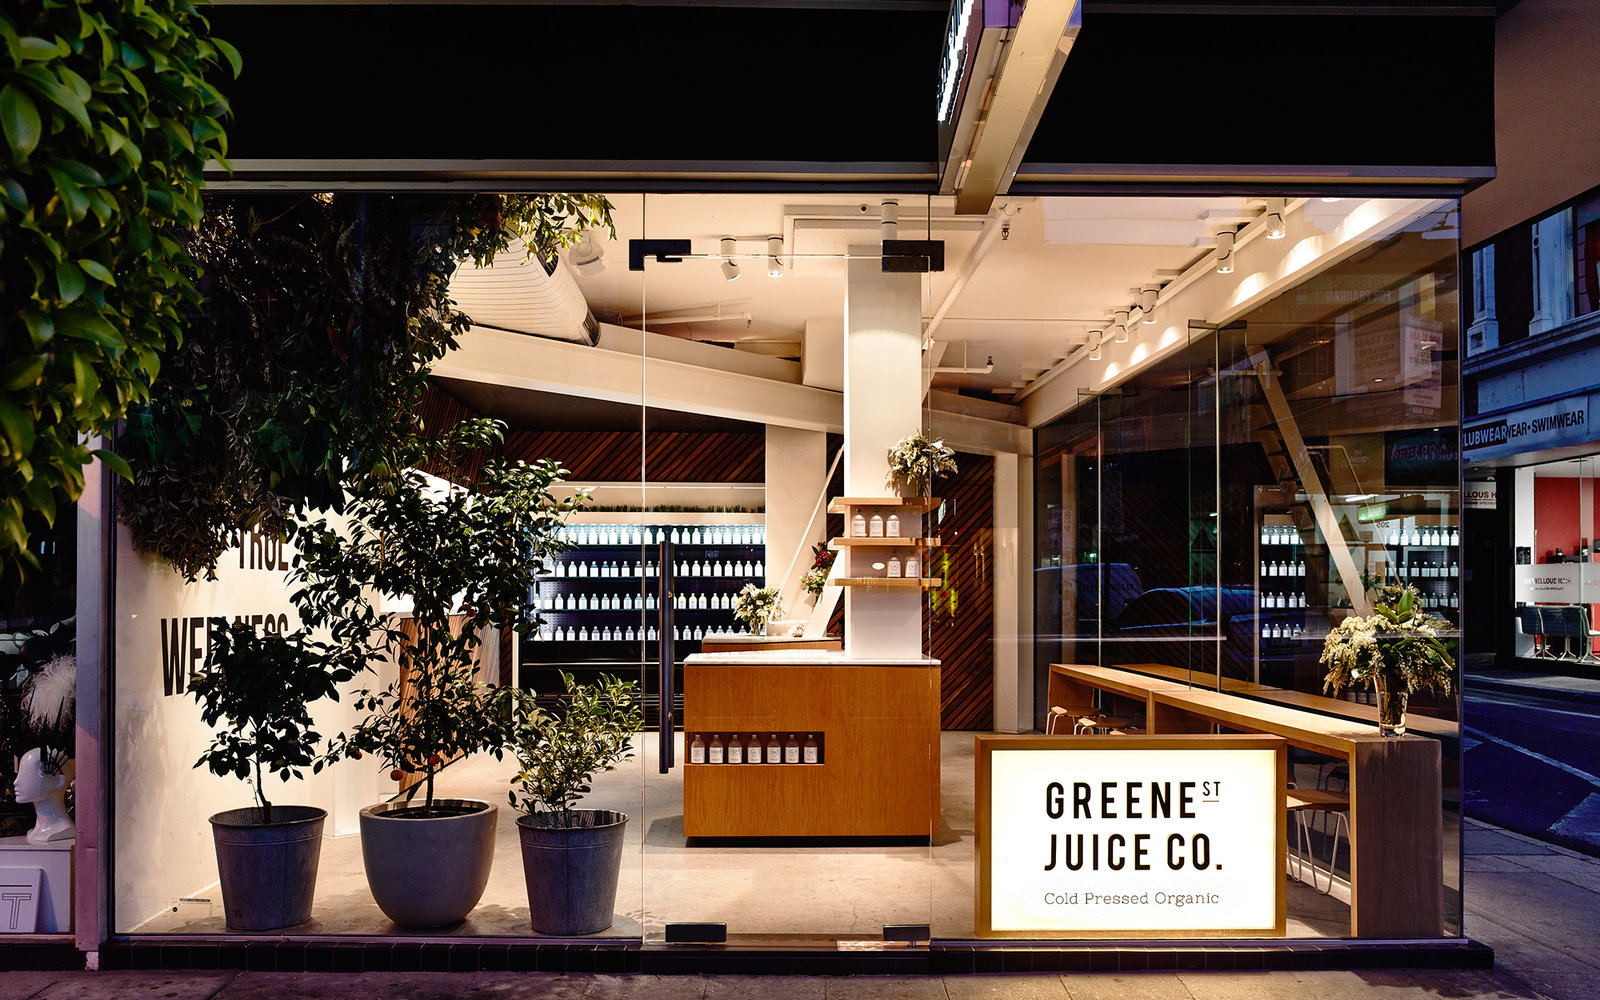 Greene St. Juice Co. Melbourne Australia